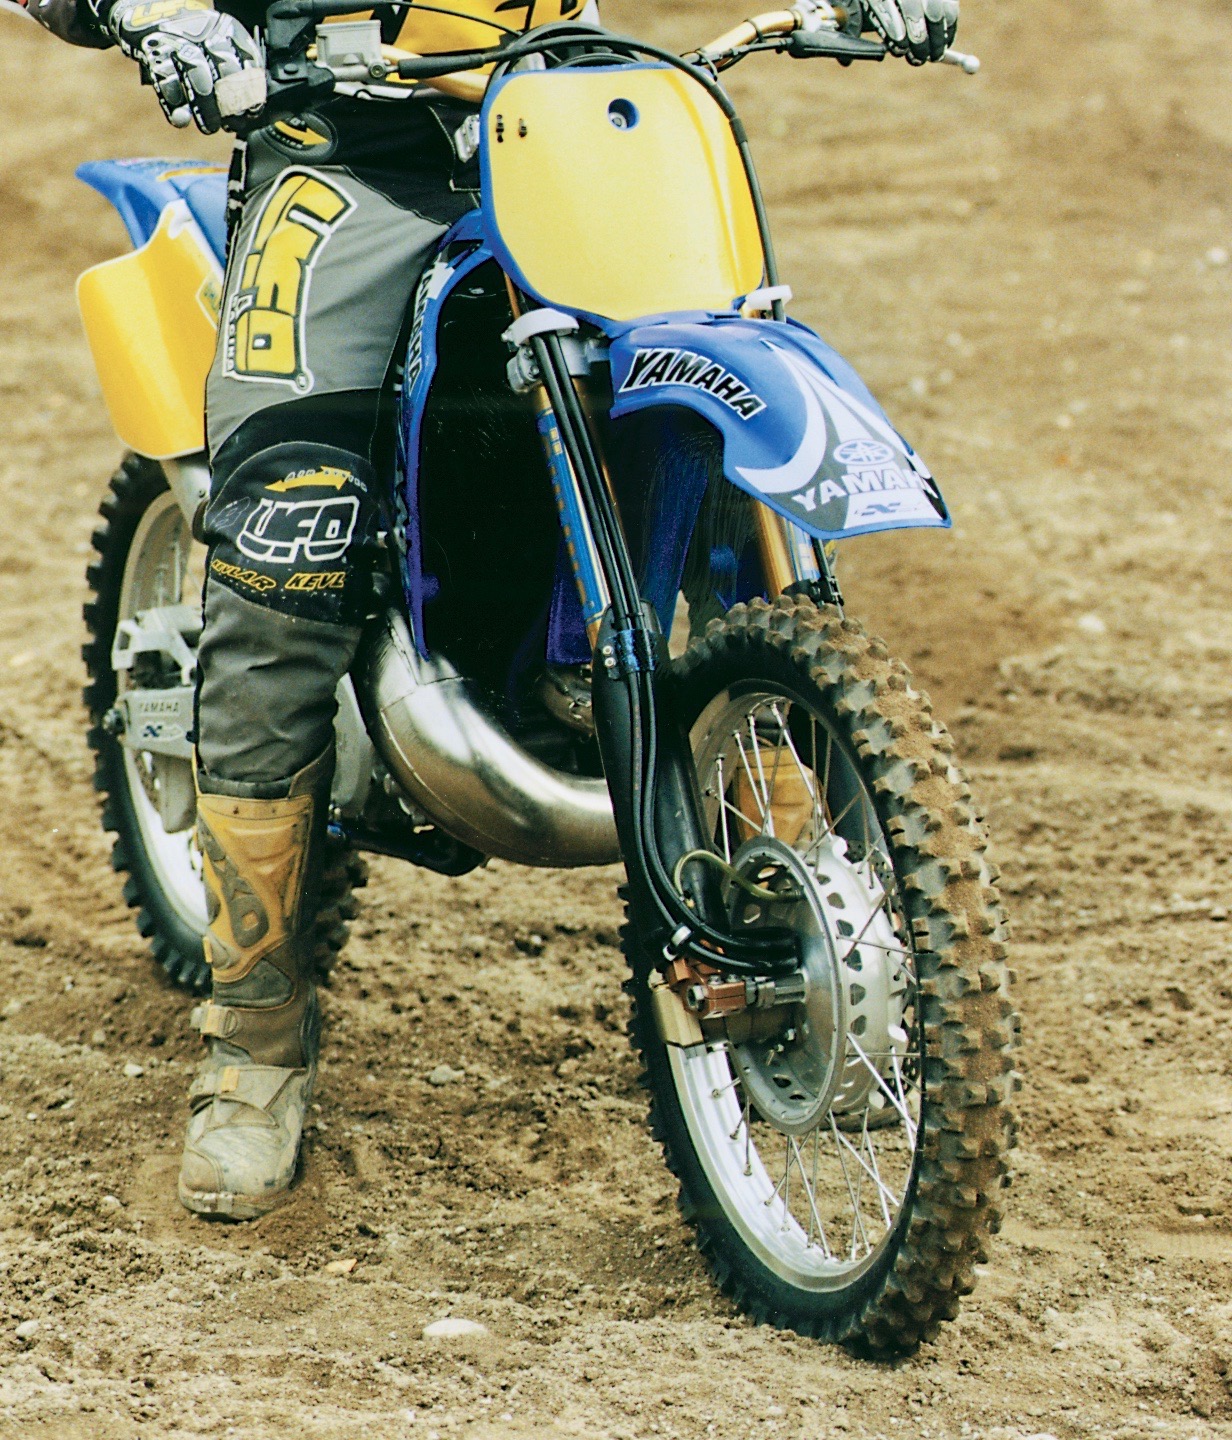 NÓS MONTAMOS DAVID O'CONNOR'S VET MXDN 2002 YAMAHA YZ250 - Motocross Action  Magazine